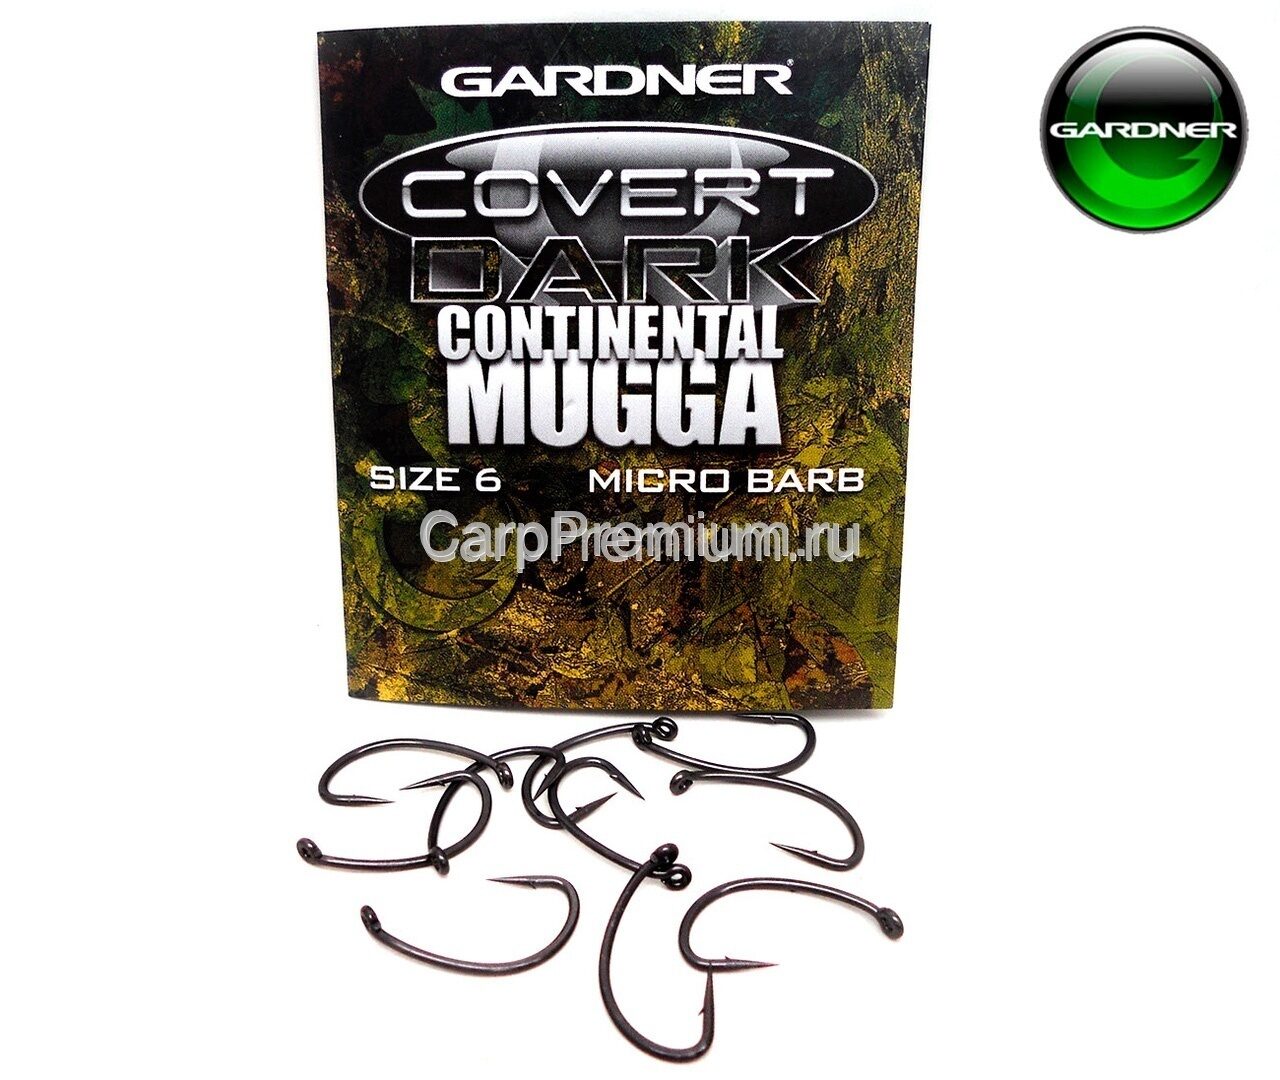 Covert Dark Continental Mugga Hook Size 6 крючки карповые. Gardner Covert Dark Continental Mugga. Gardner (Гарднер) - Covert QC Hook Swivels. Карппремиум рыболовный интернет магазин Крымск.